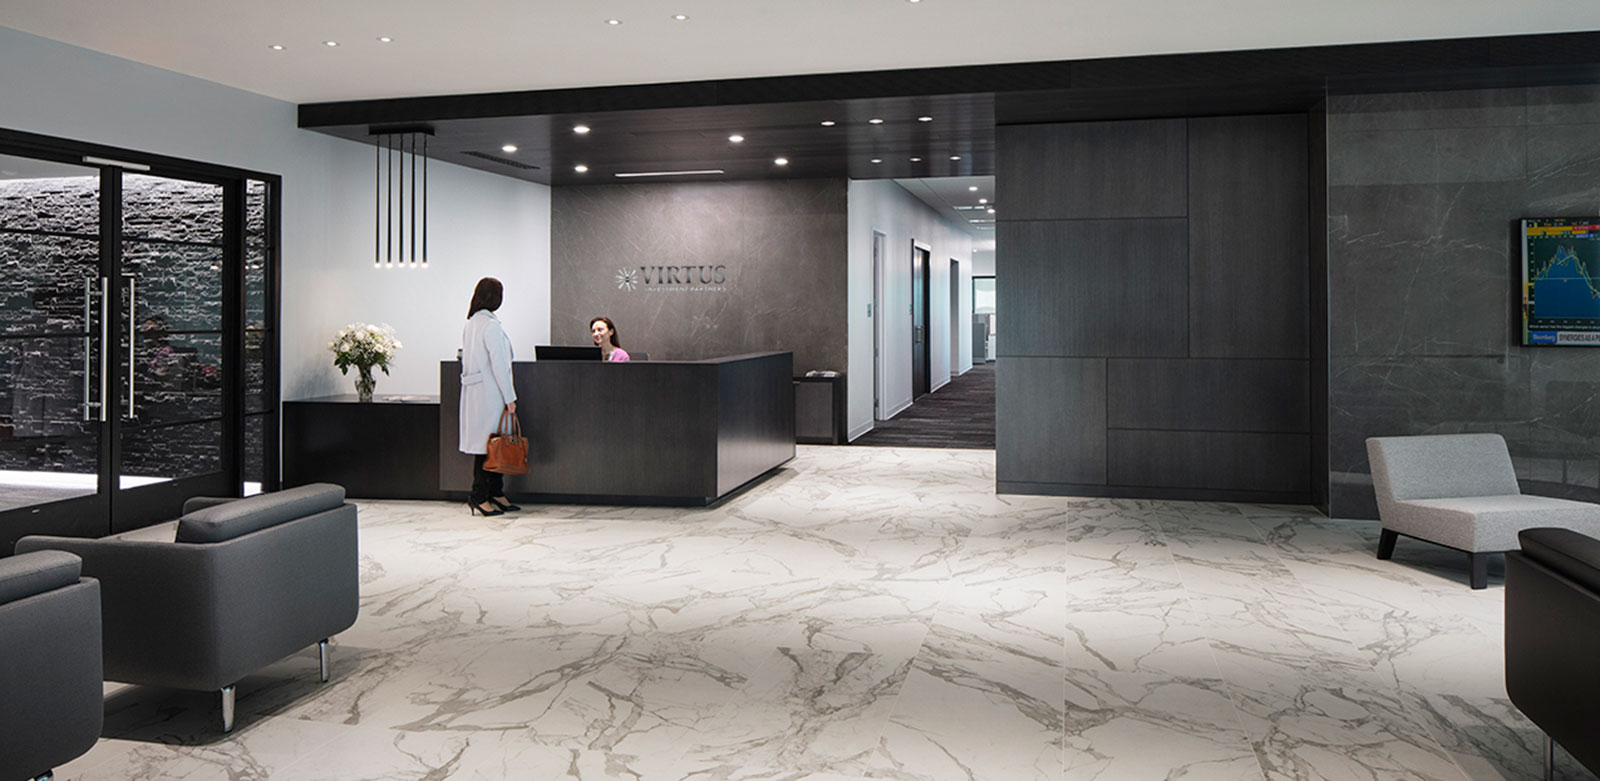 Virtus Investment Partners – New Headquarters